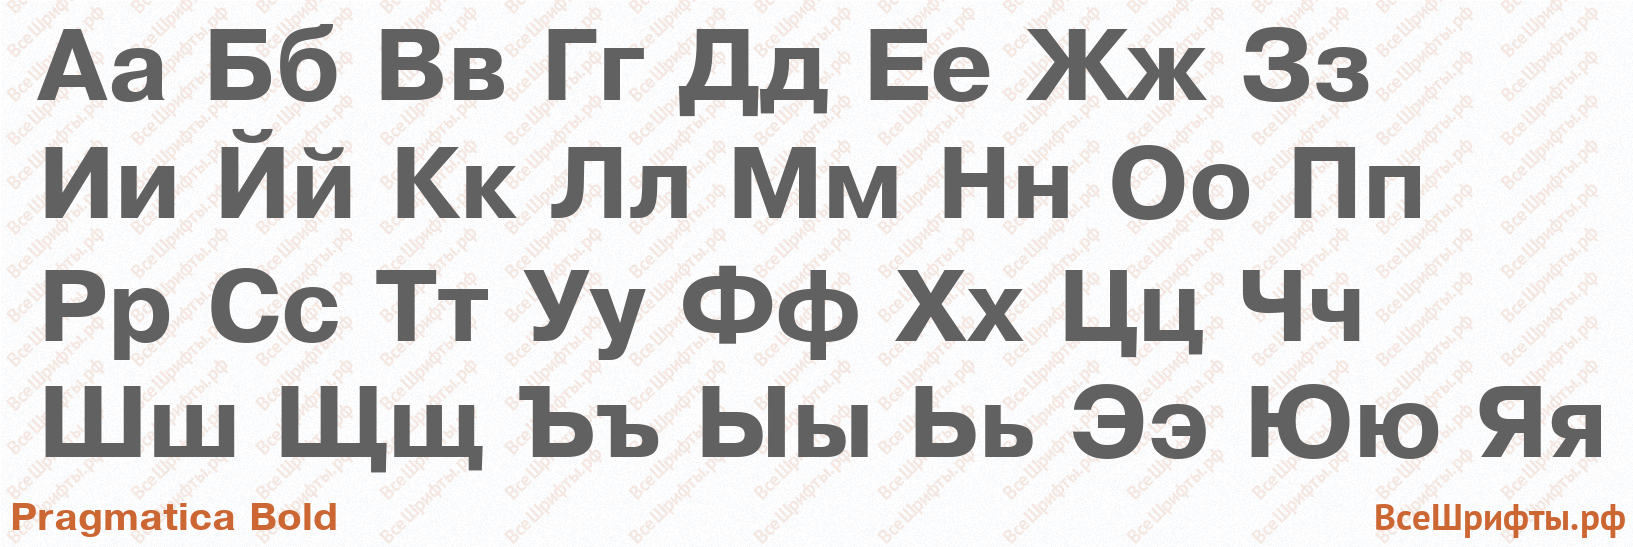 Шрифт Pragmatica Bold с русскими буквами